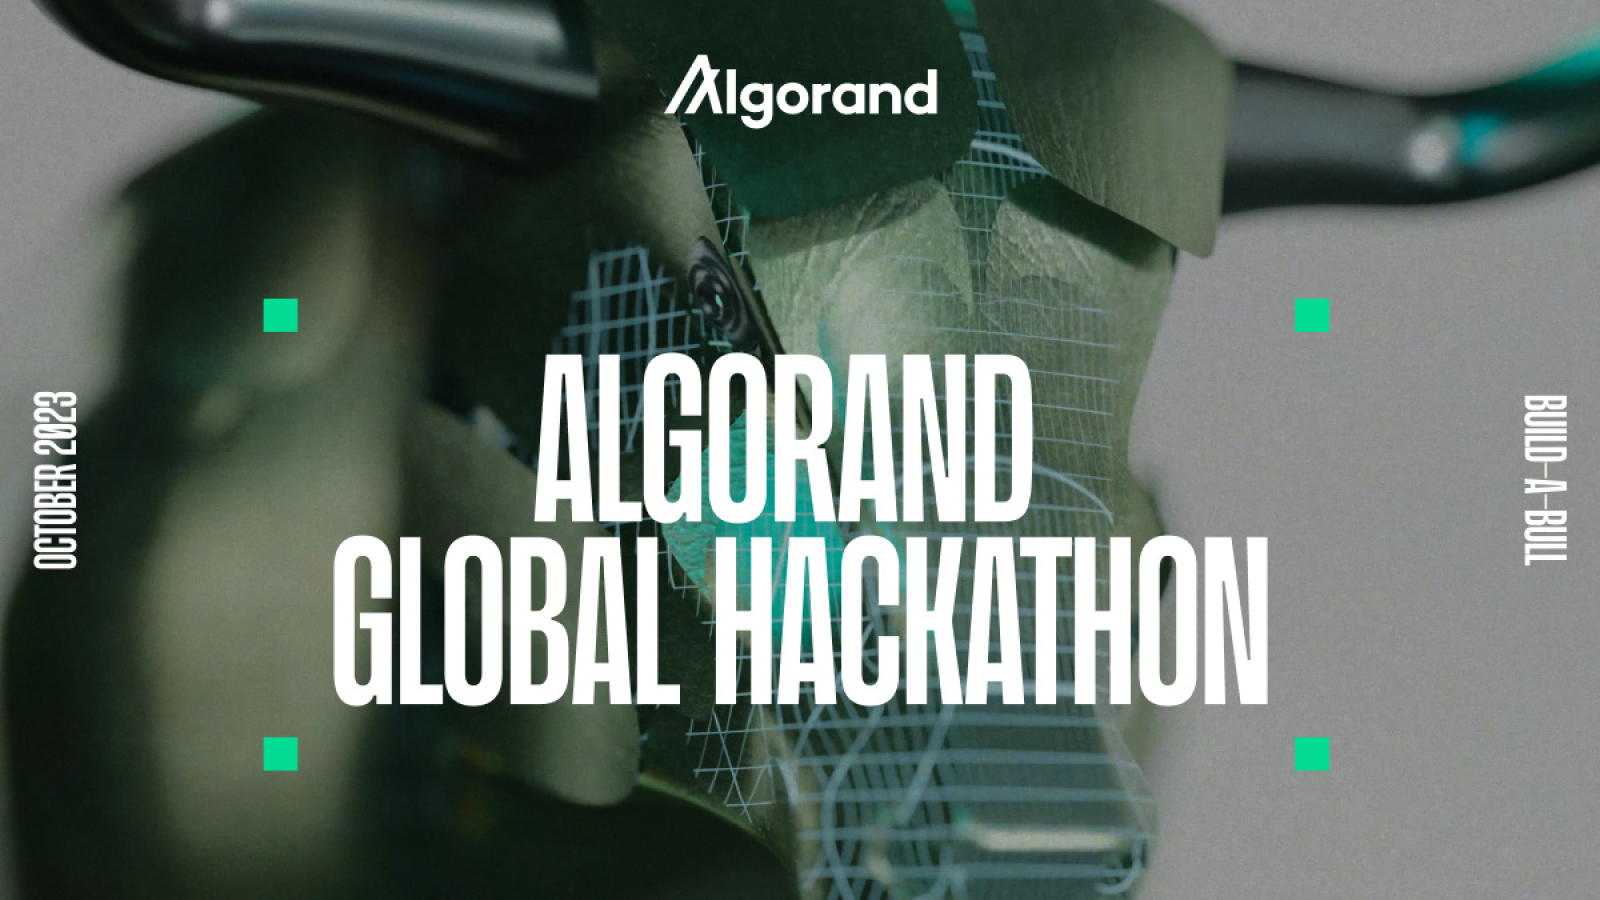 Algorand Foundation Announces Build-A-Bull Hackathon in collaboration with AWS